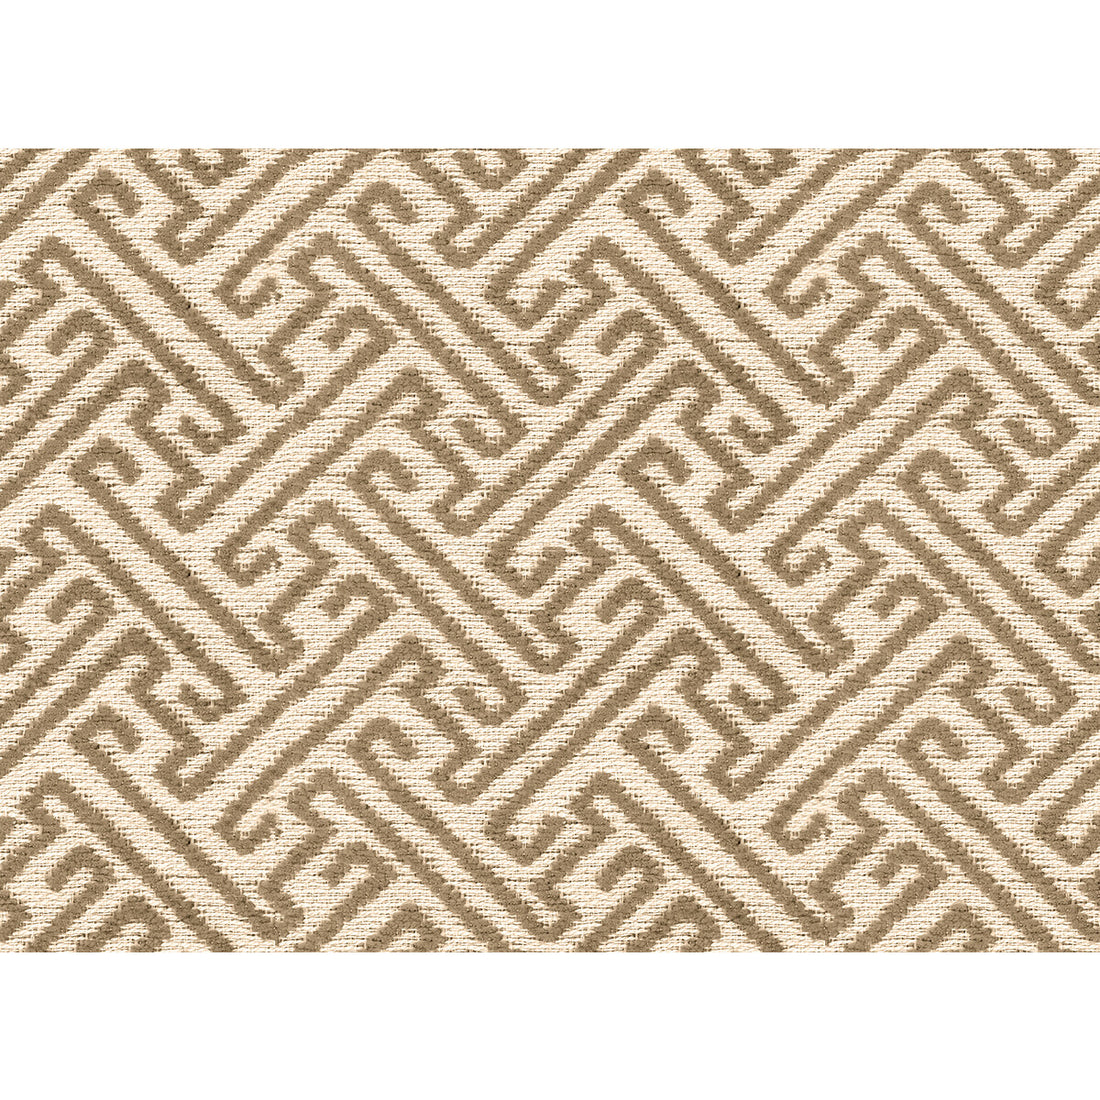 Kravet Smart fabric in 30698-1611 color - pattern 30698.1611.0 - by Kravet Smart